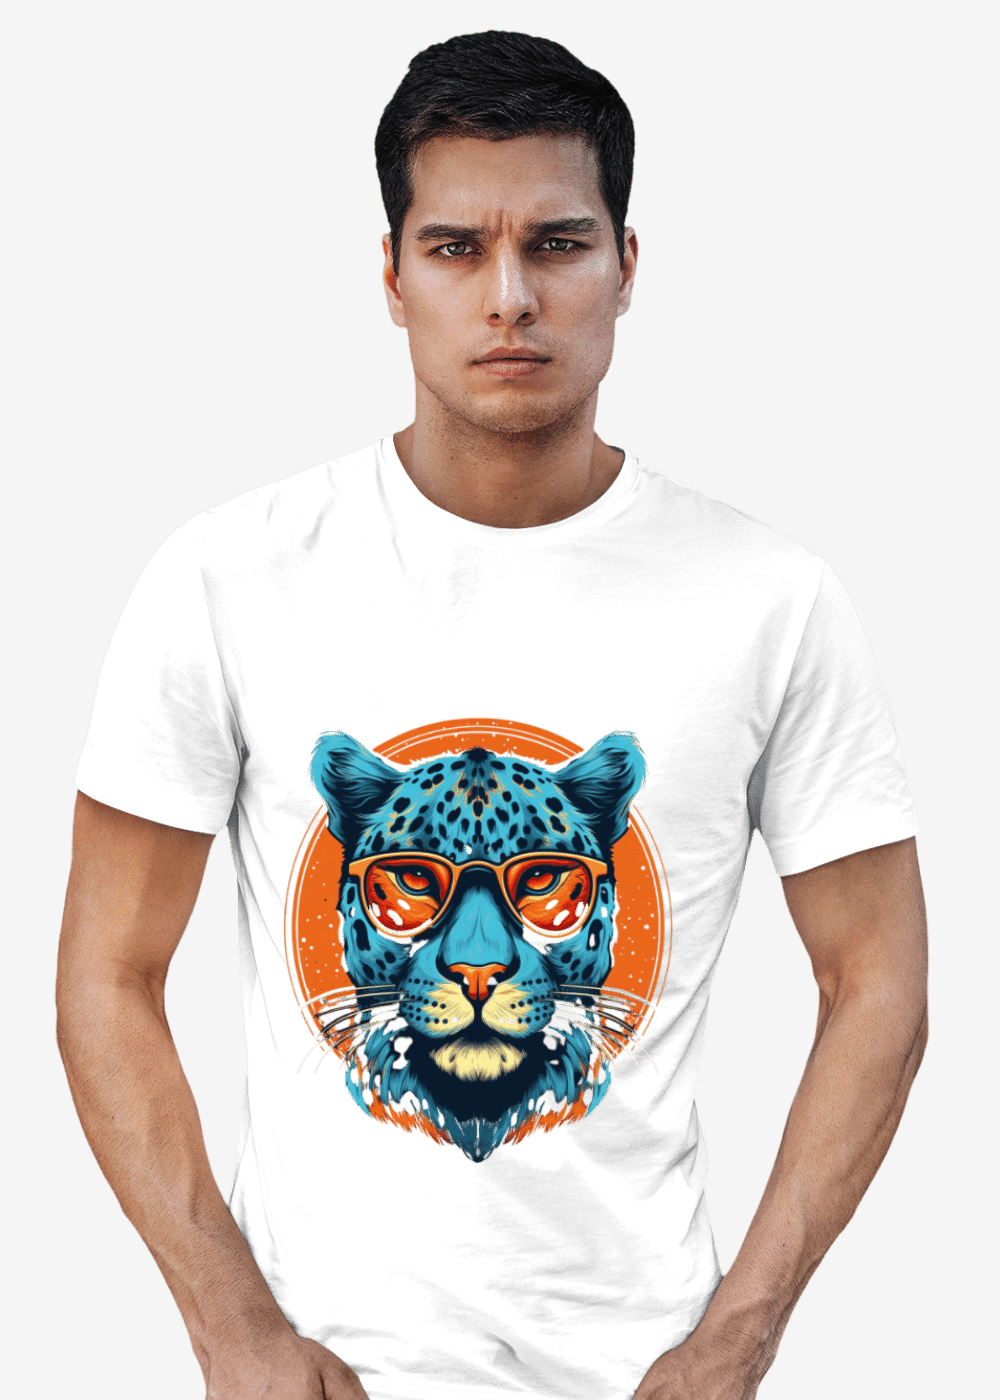 Leopard Print Cool T Shirt for Men